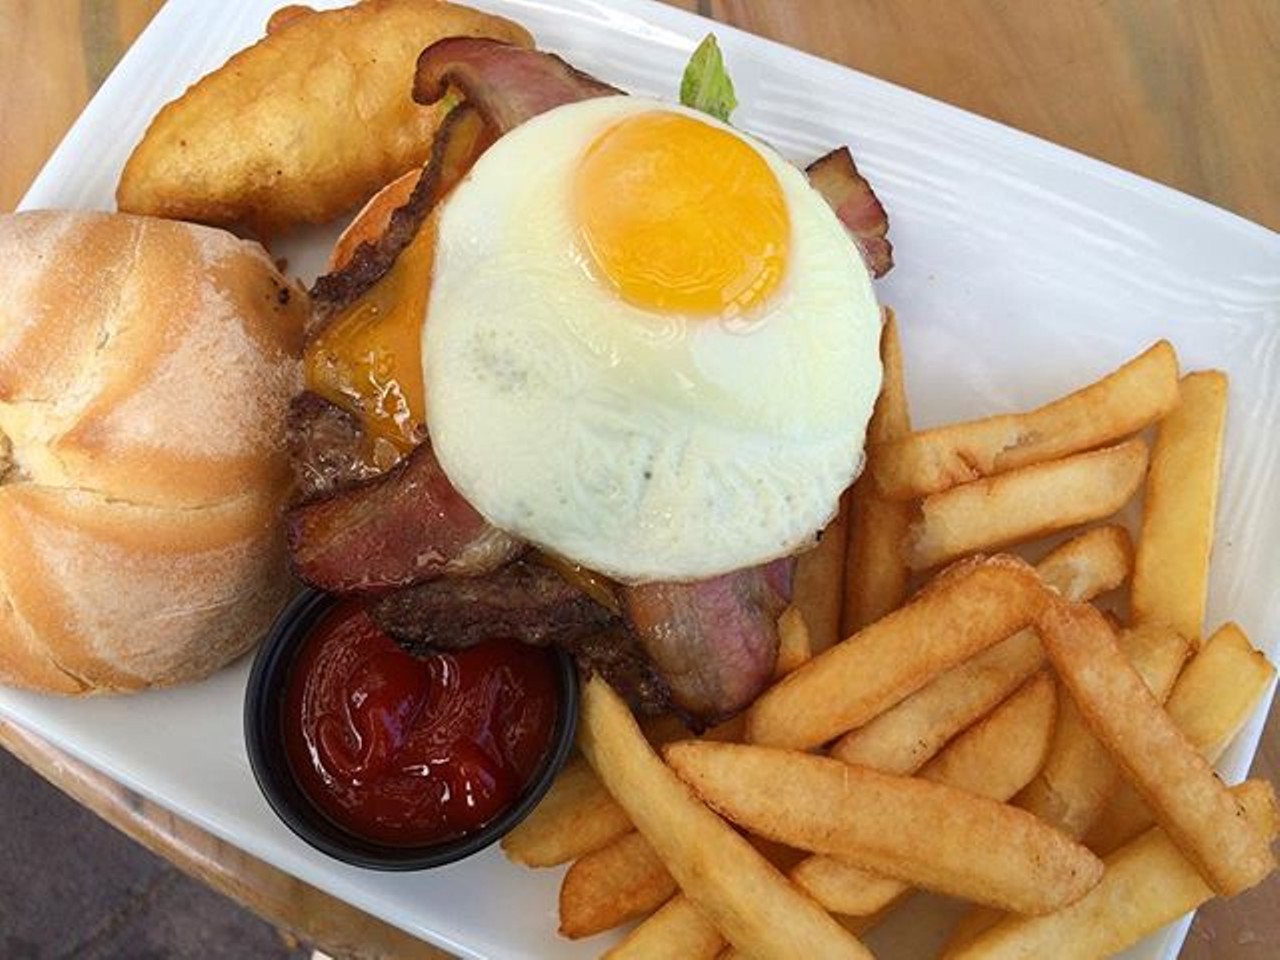 English Breakfast Burger at Epcot's Rose & Crown.
Photo via @jabead